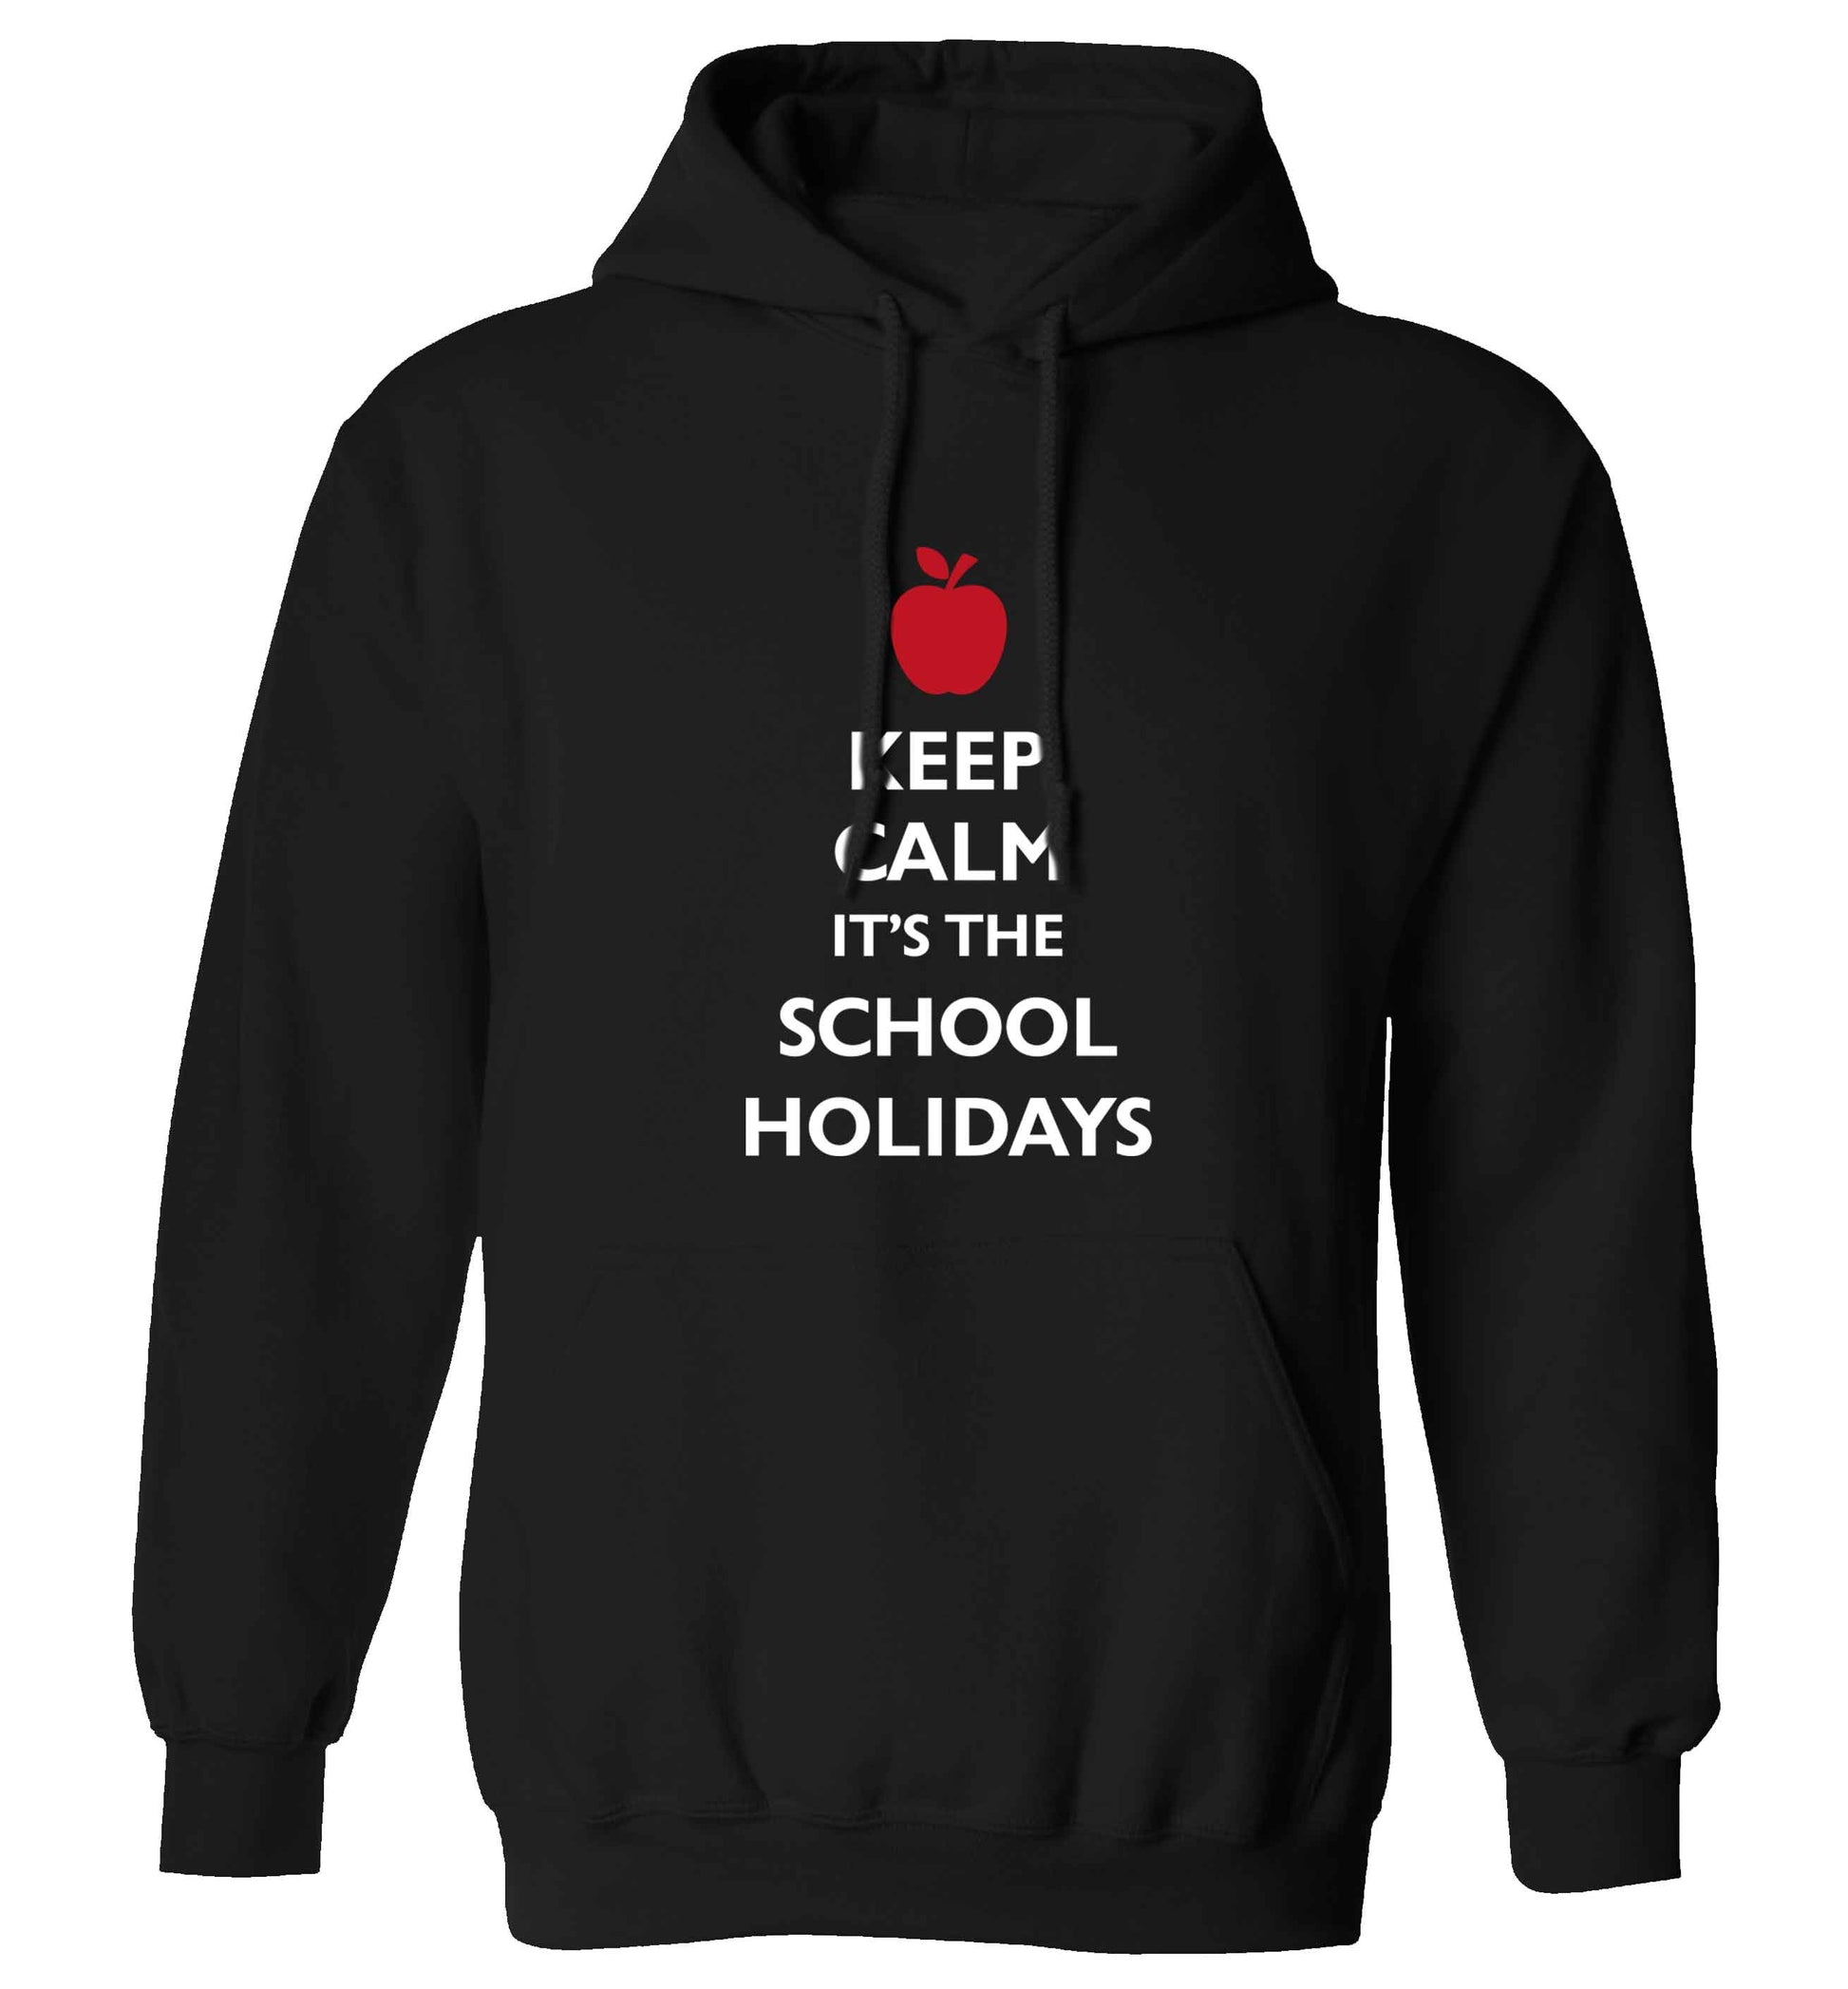 Keep calm it's the school holidays adults unisex black hoodie 2XL